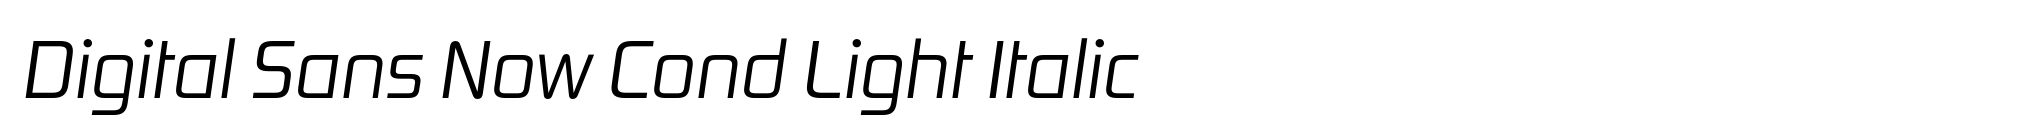 Digital Sans Now Cond Light Italic image